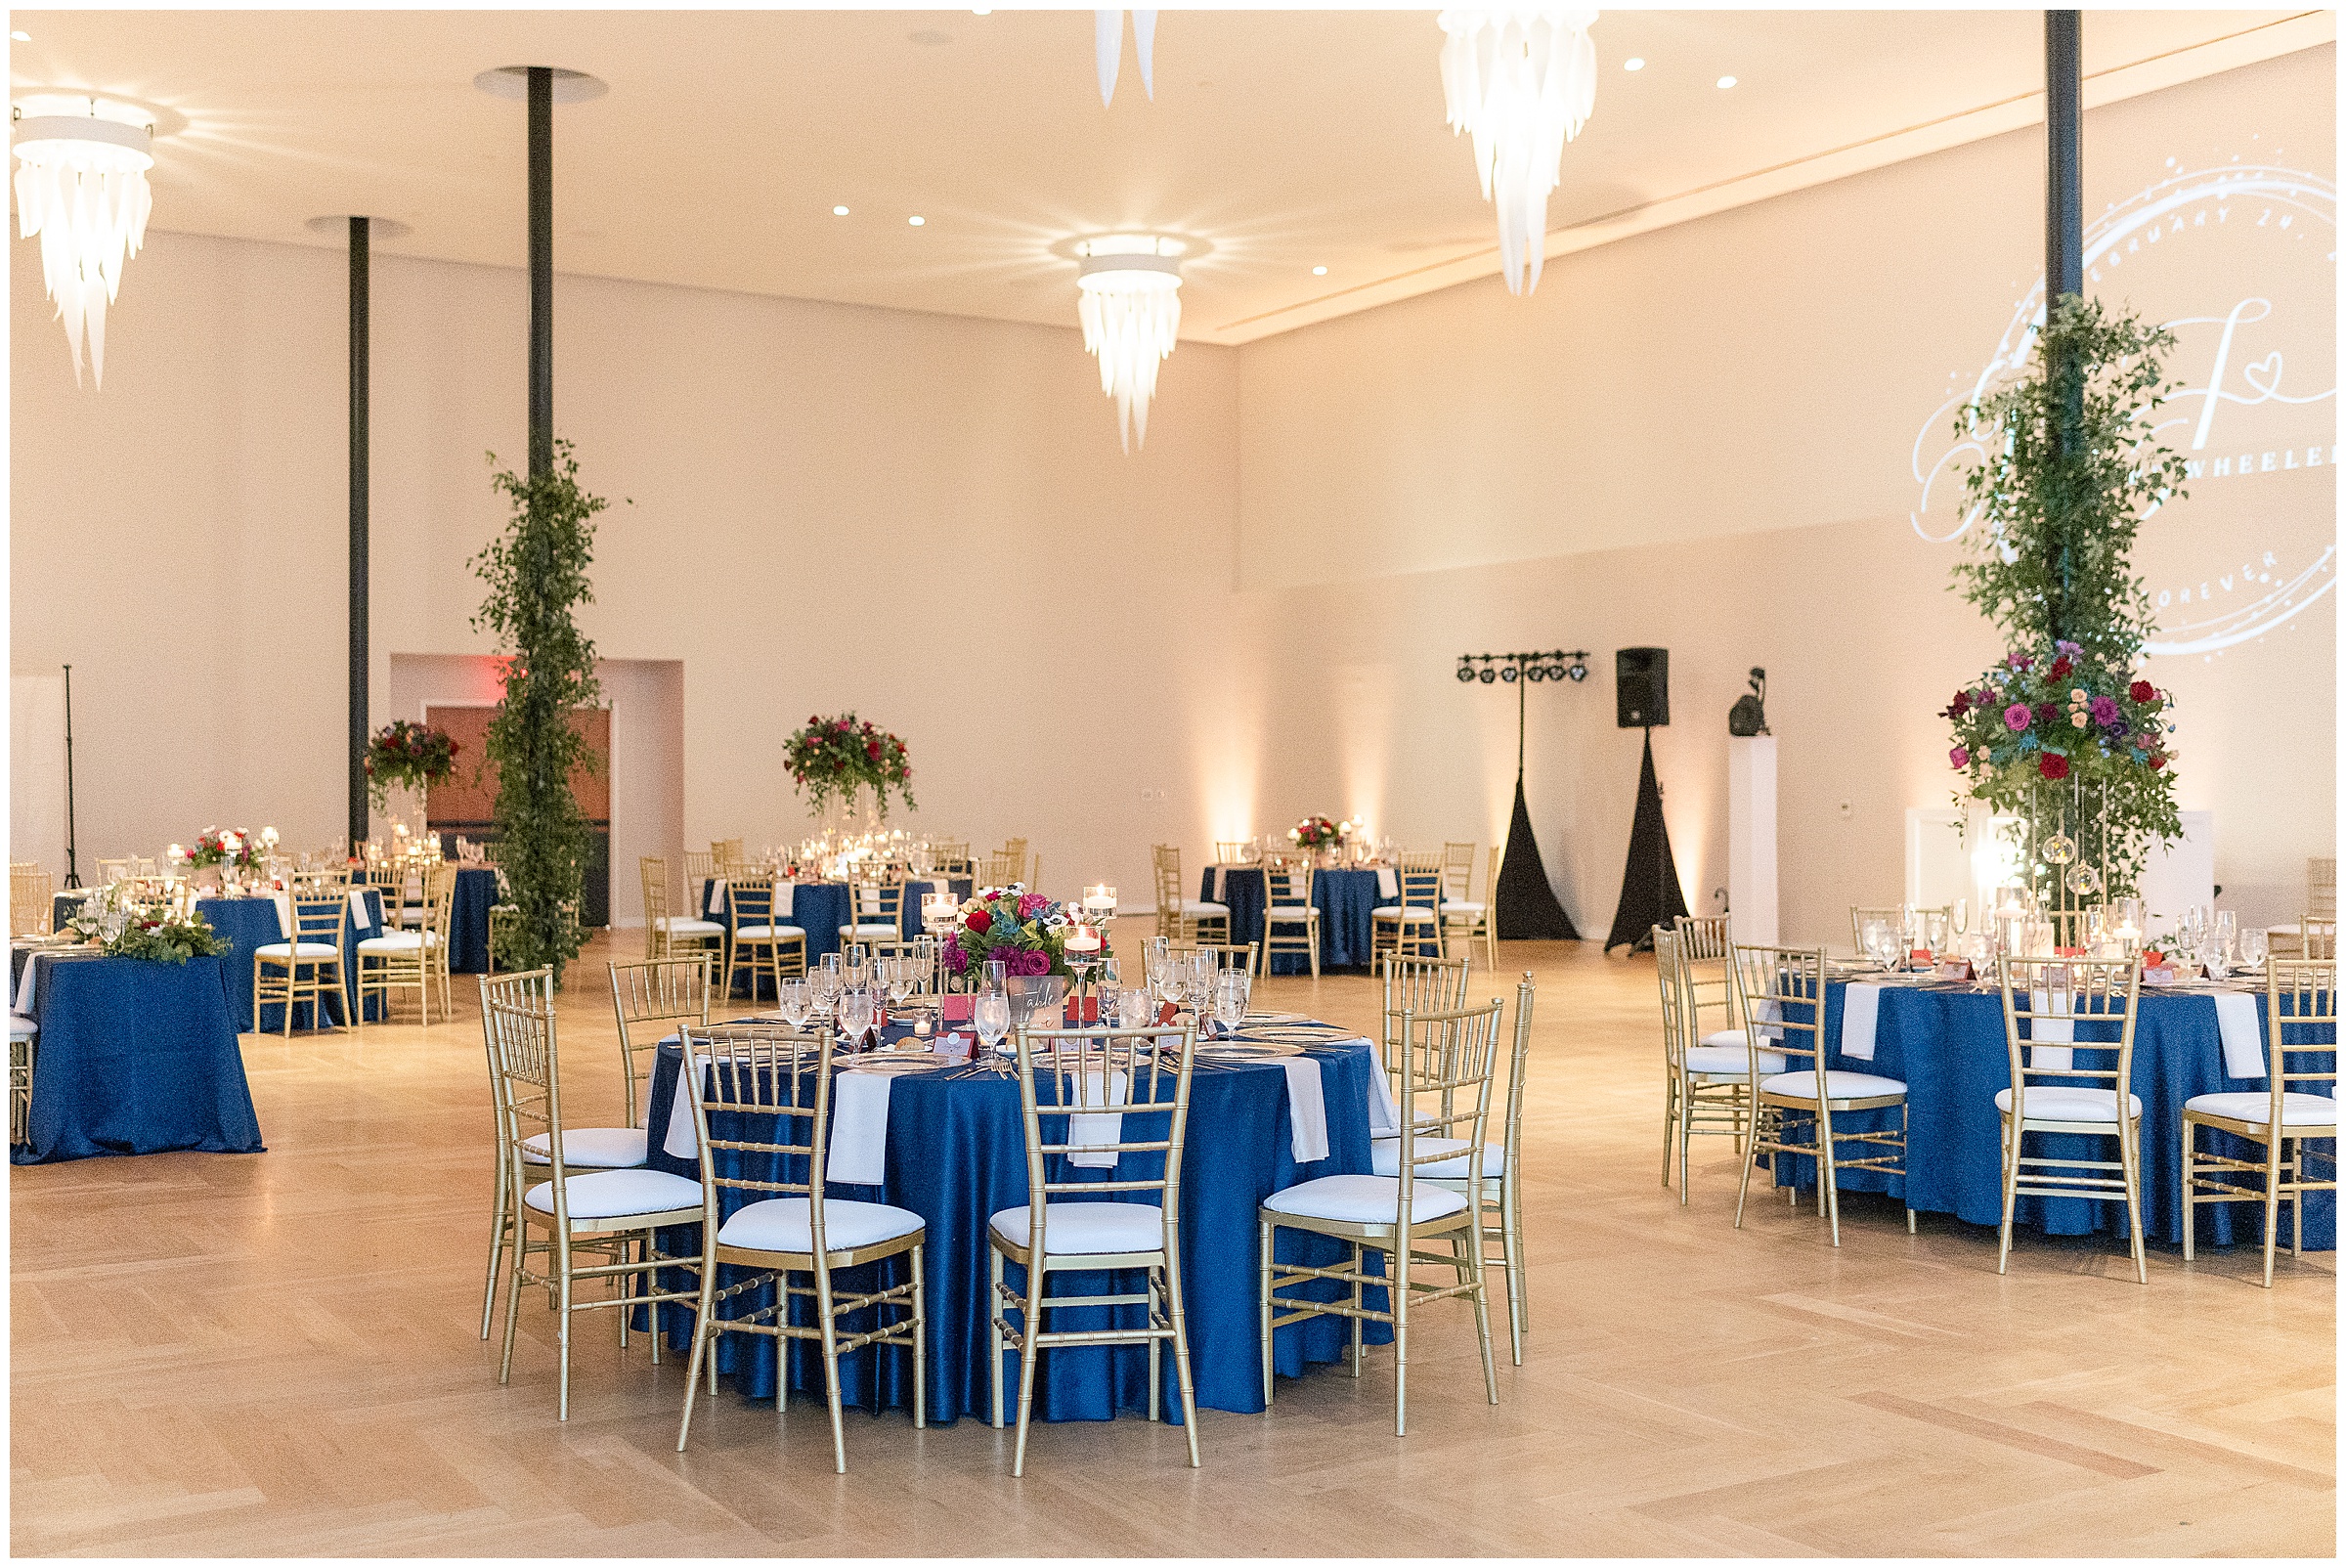 Hotel Haya Wedding Reception - Valencia Ballroom